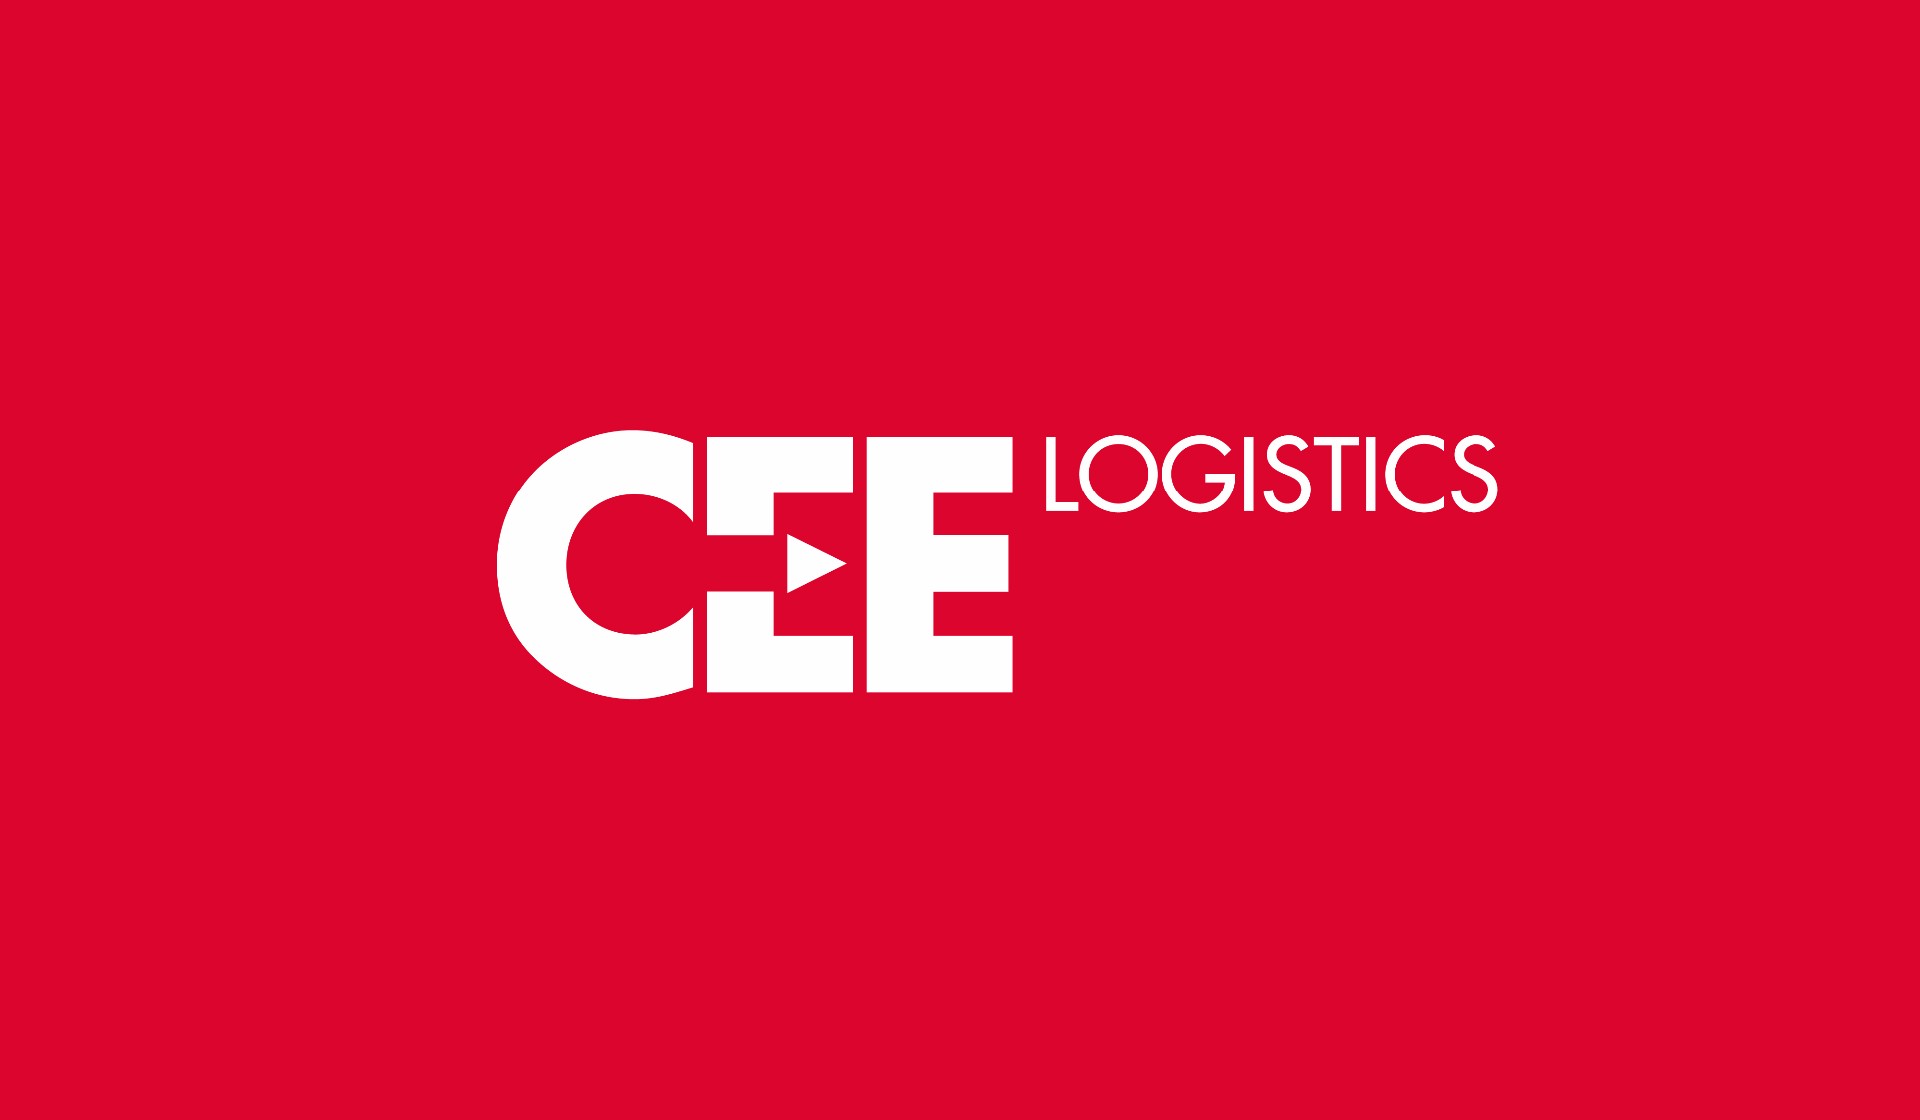 cee logistics logo-02